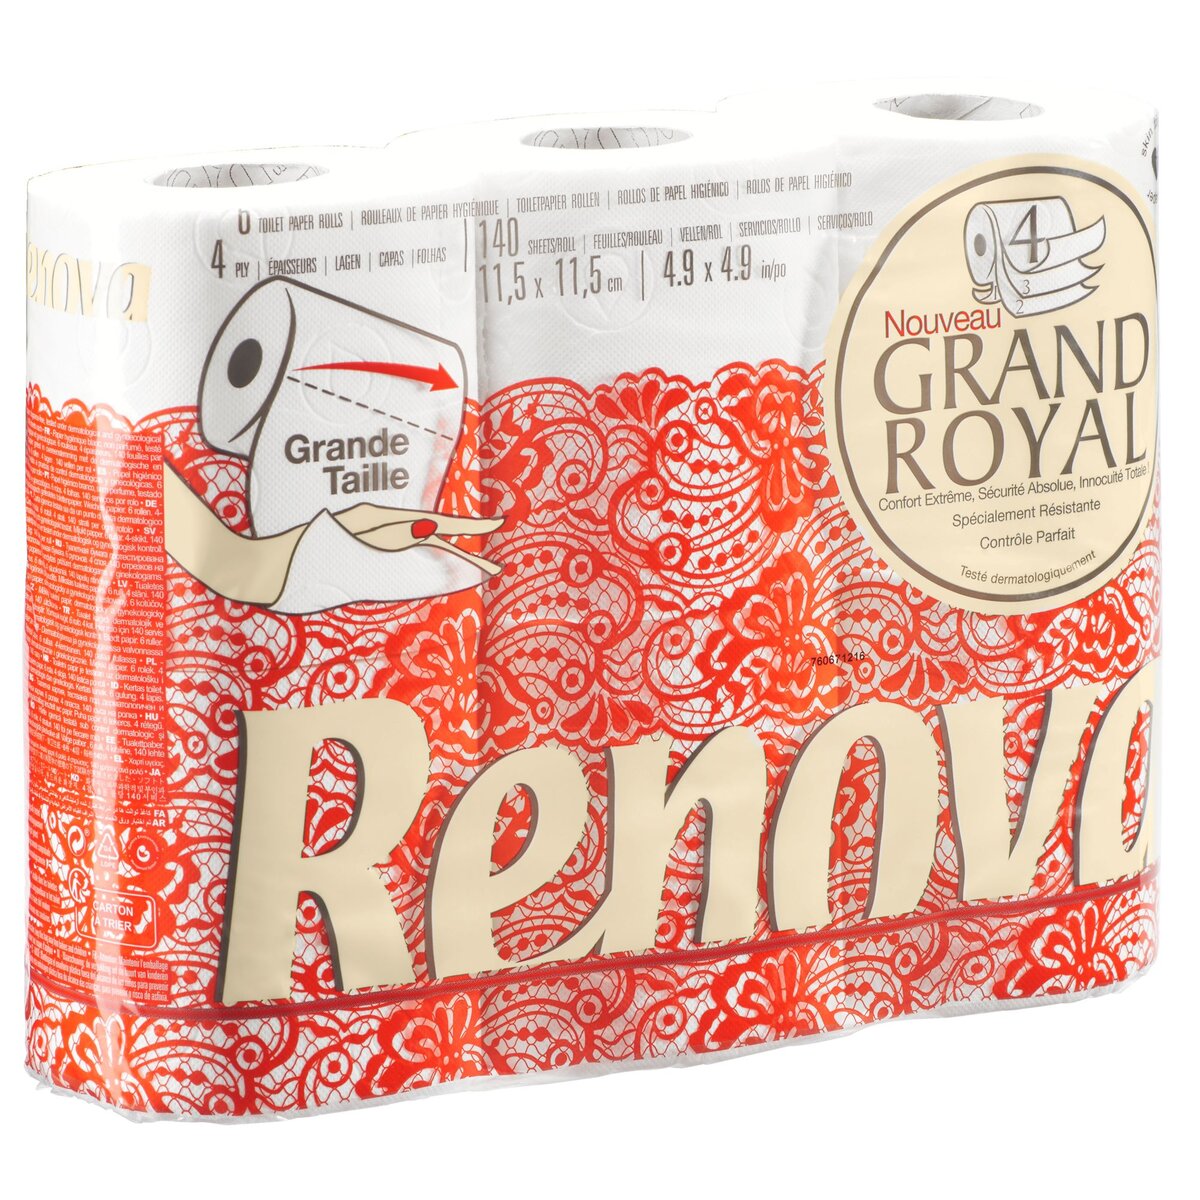 Papier toilette grand royal renova - carton 30 rouleaux 140